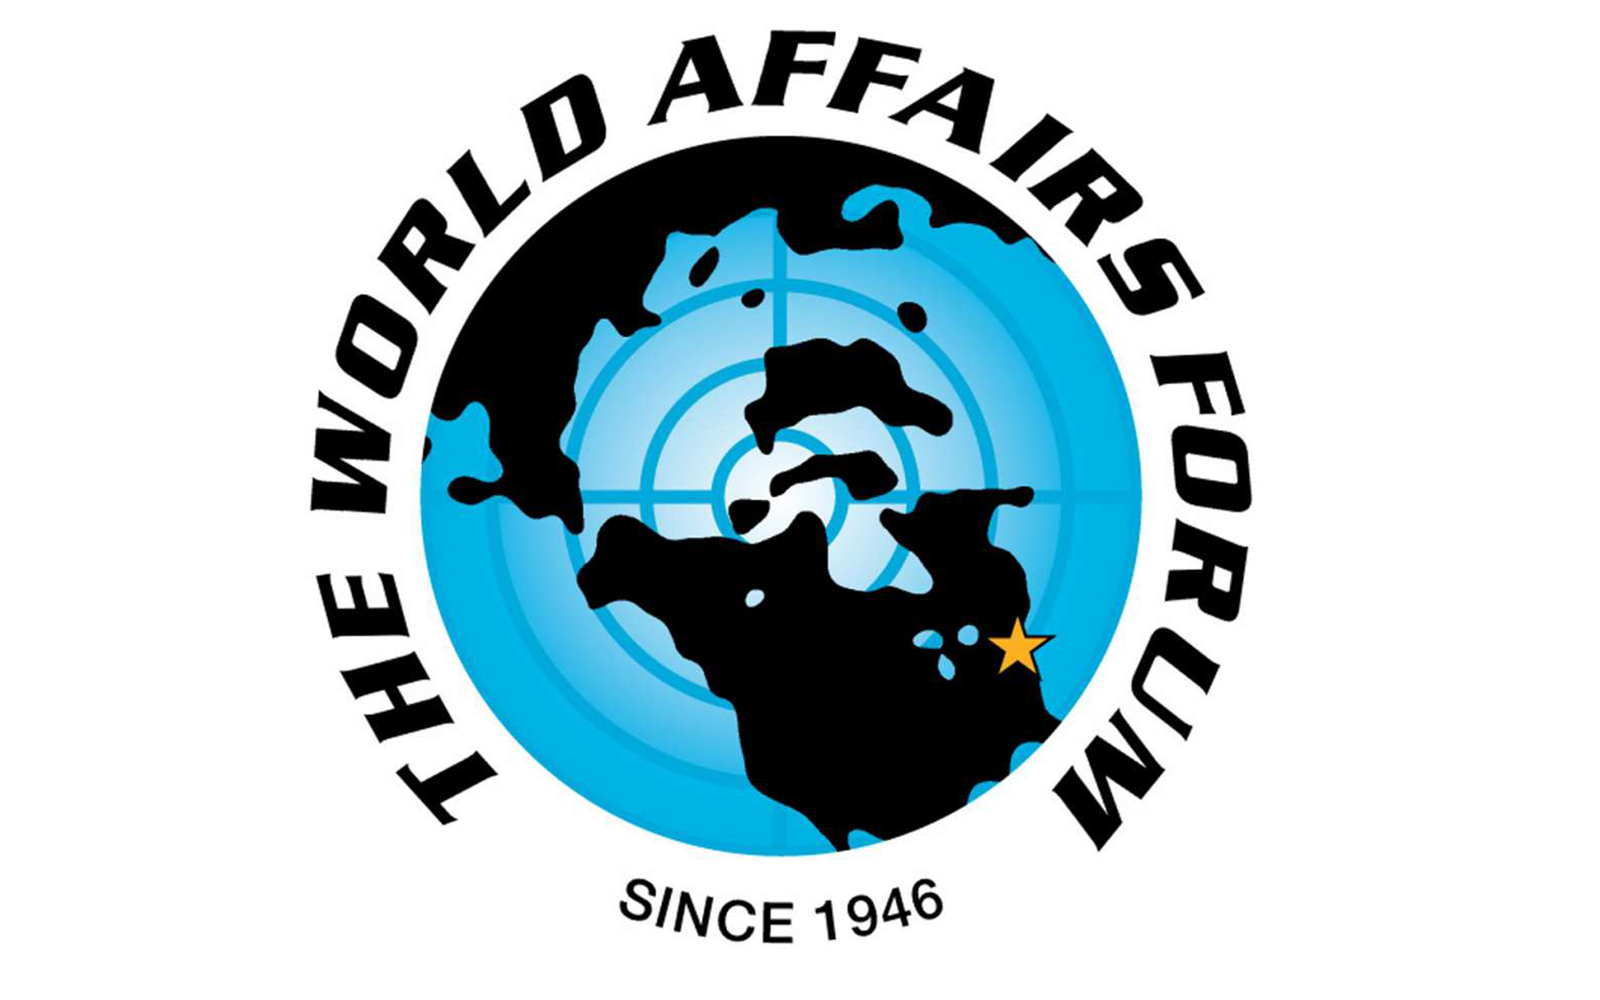 The World Affairs Forum | Stamford